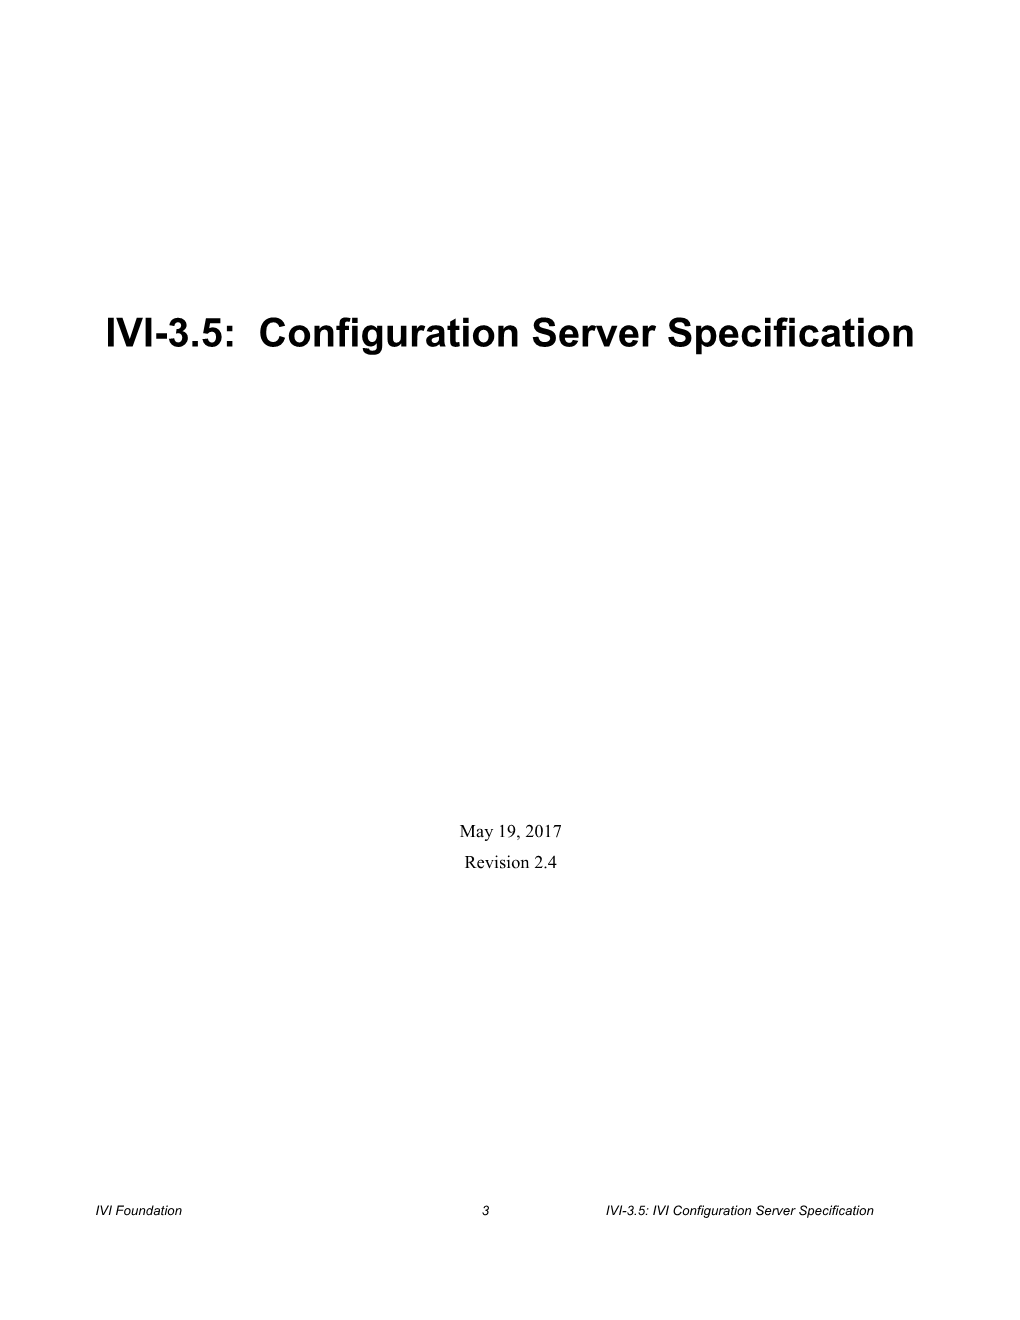 IVI Configuration Server Specification